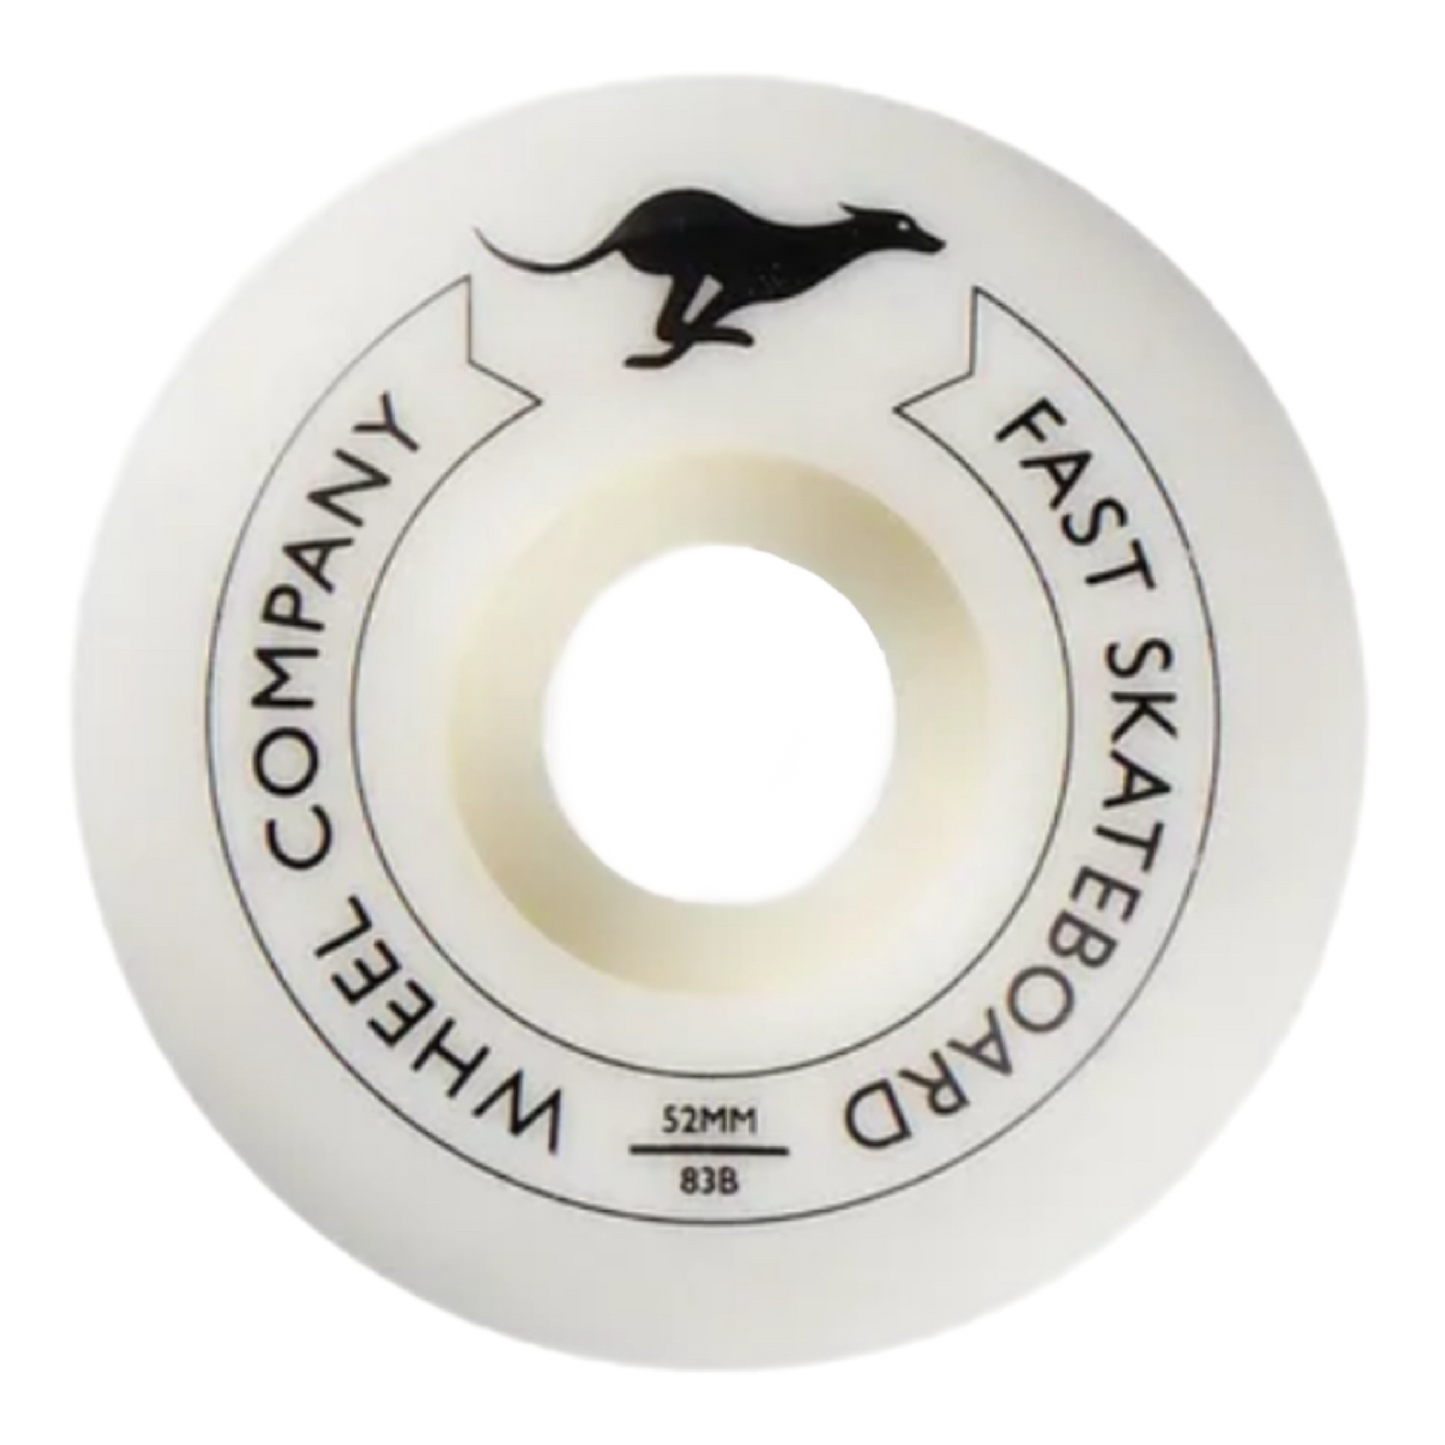 Fast Skateboard Wheel Company - Fast OG Wheels 52mm (83b)